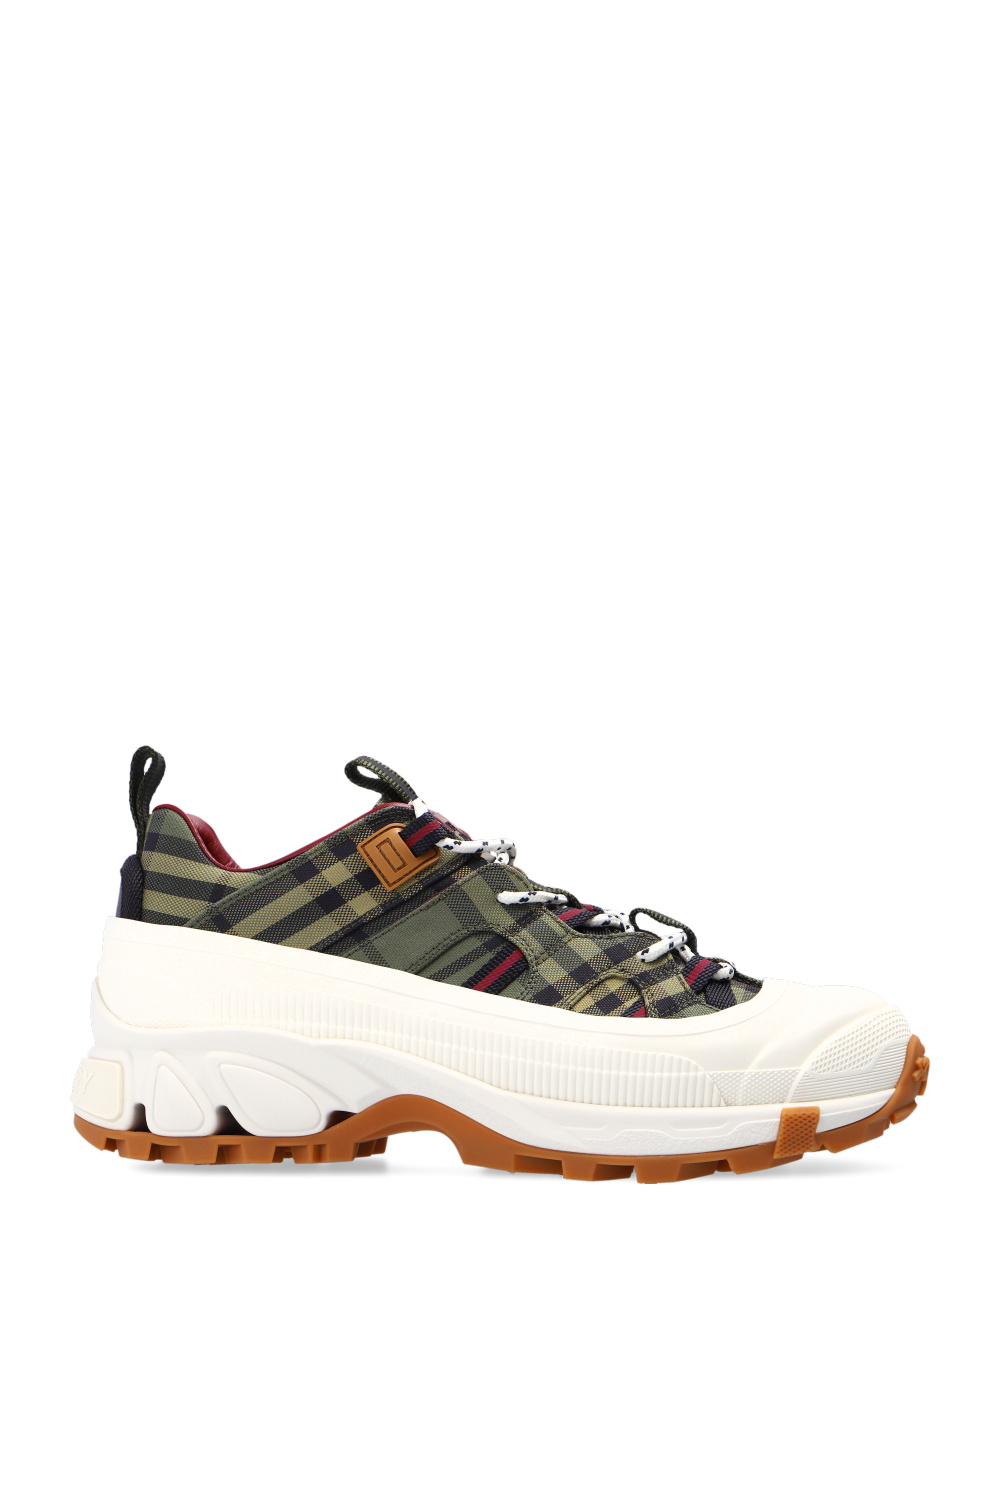 Burberry ‘Arthur’ platform sneakers